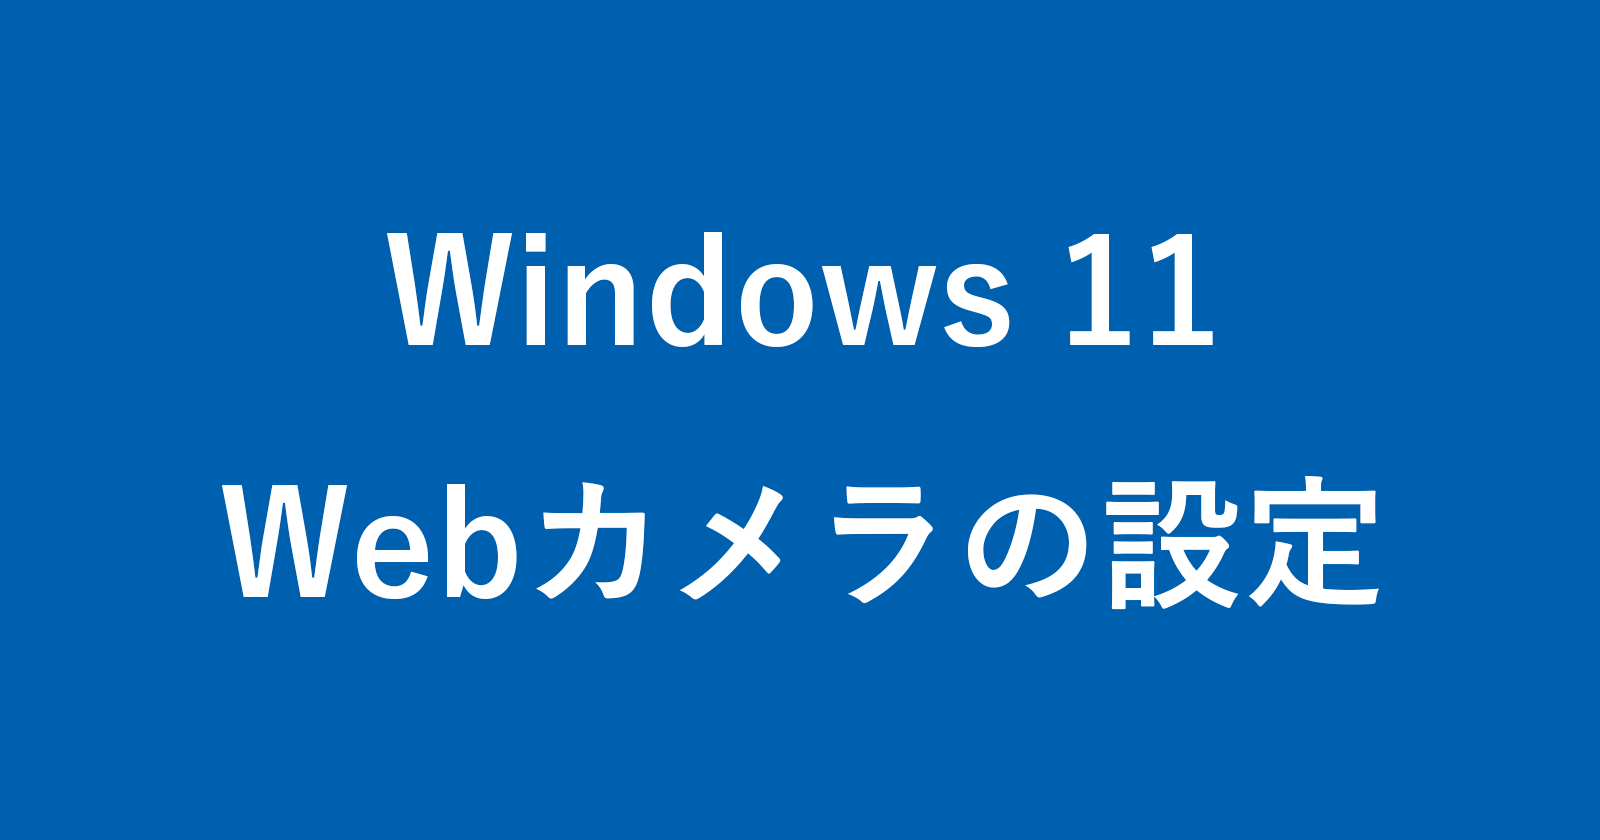 windows 11 web camera